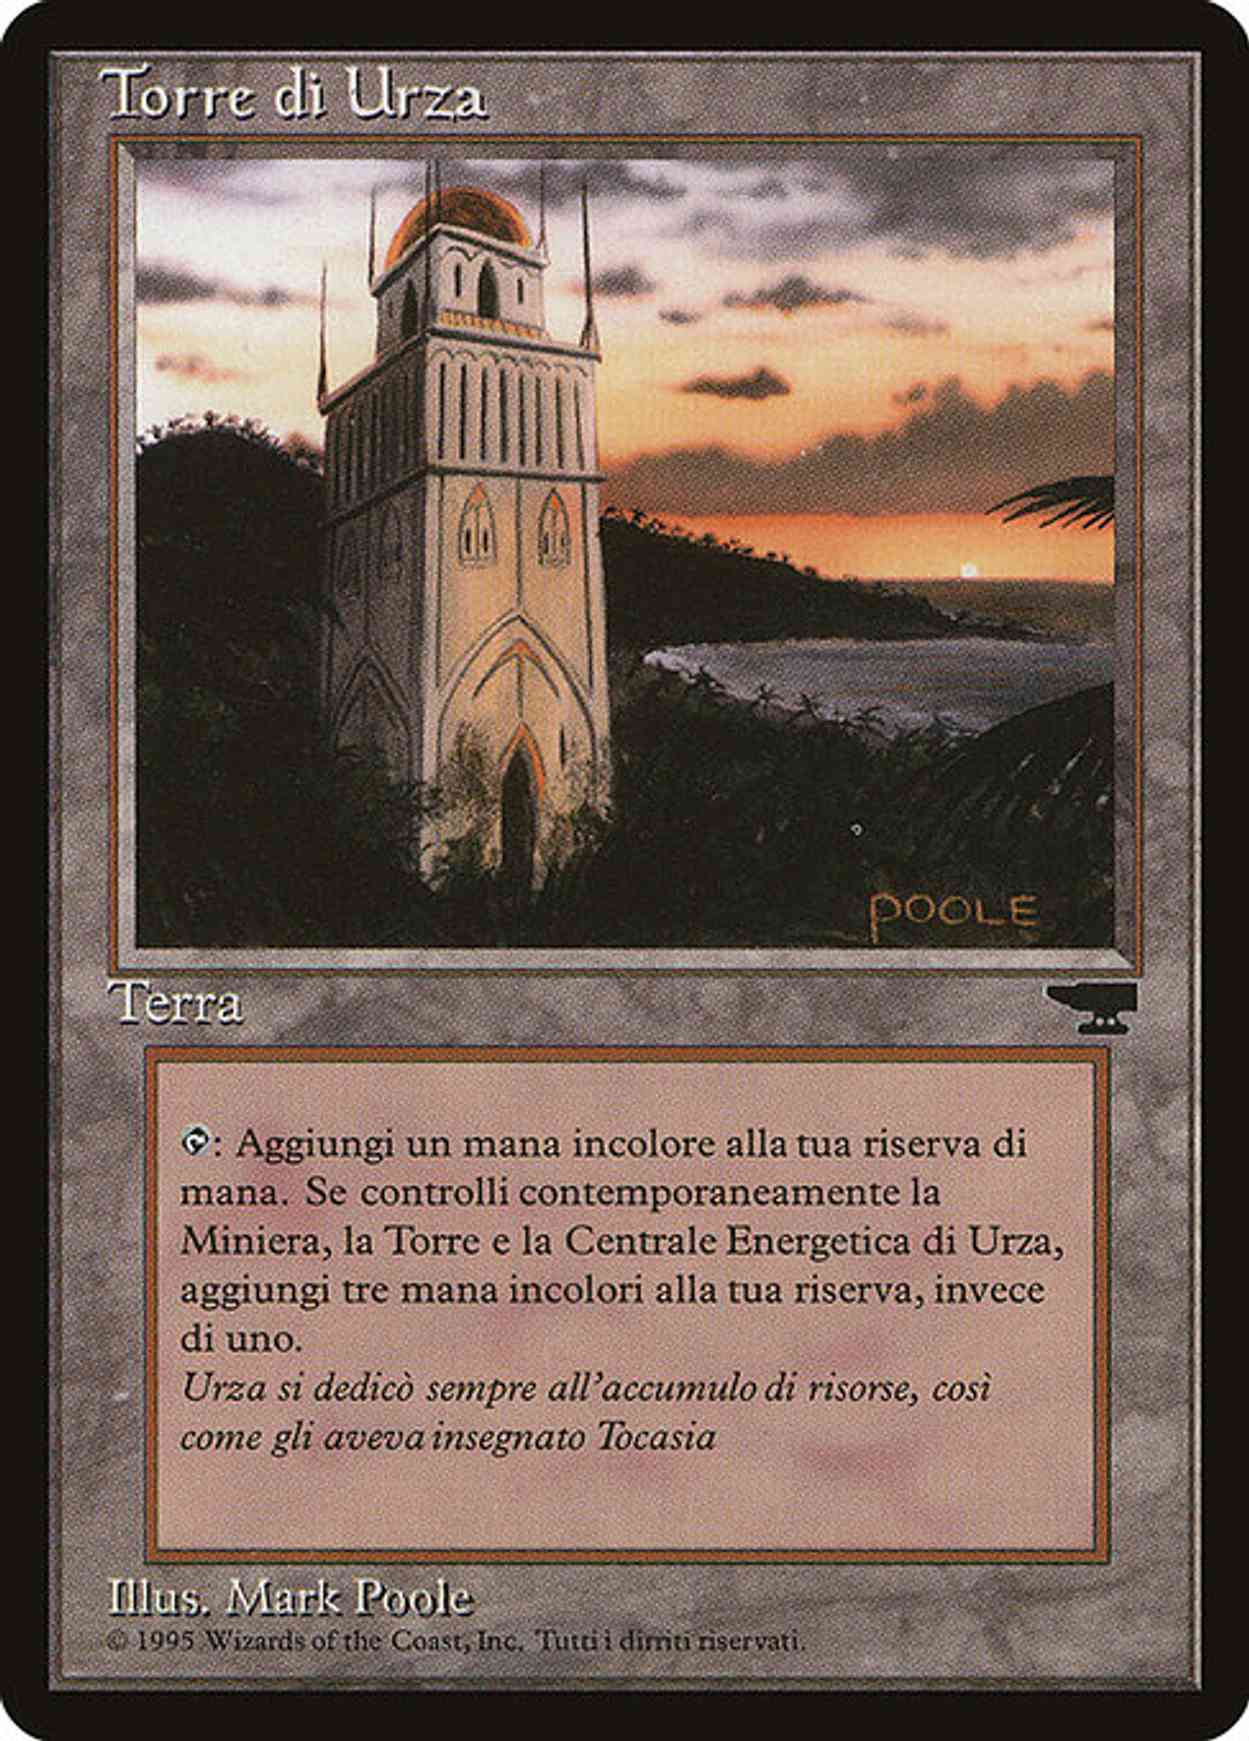 Urza's Tower (Shore) (Italian) - "Torre di Urza" magic card front